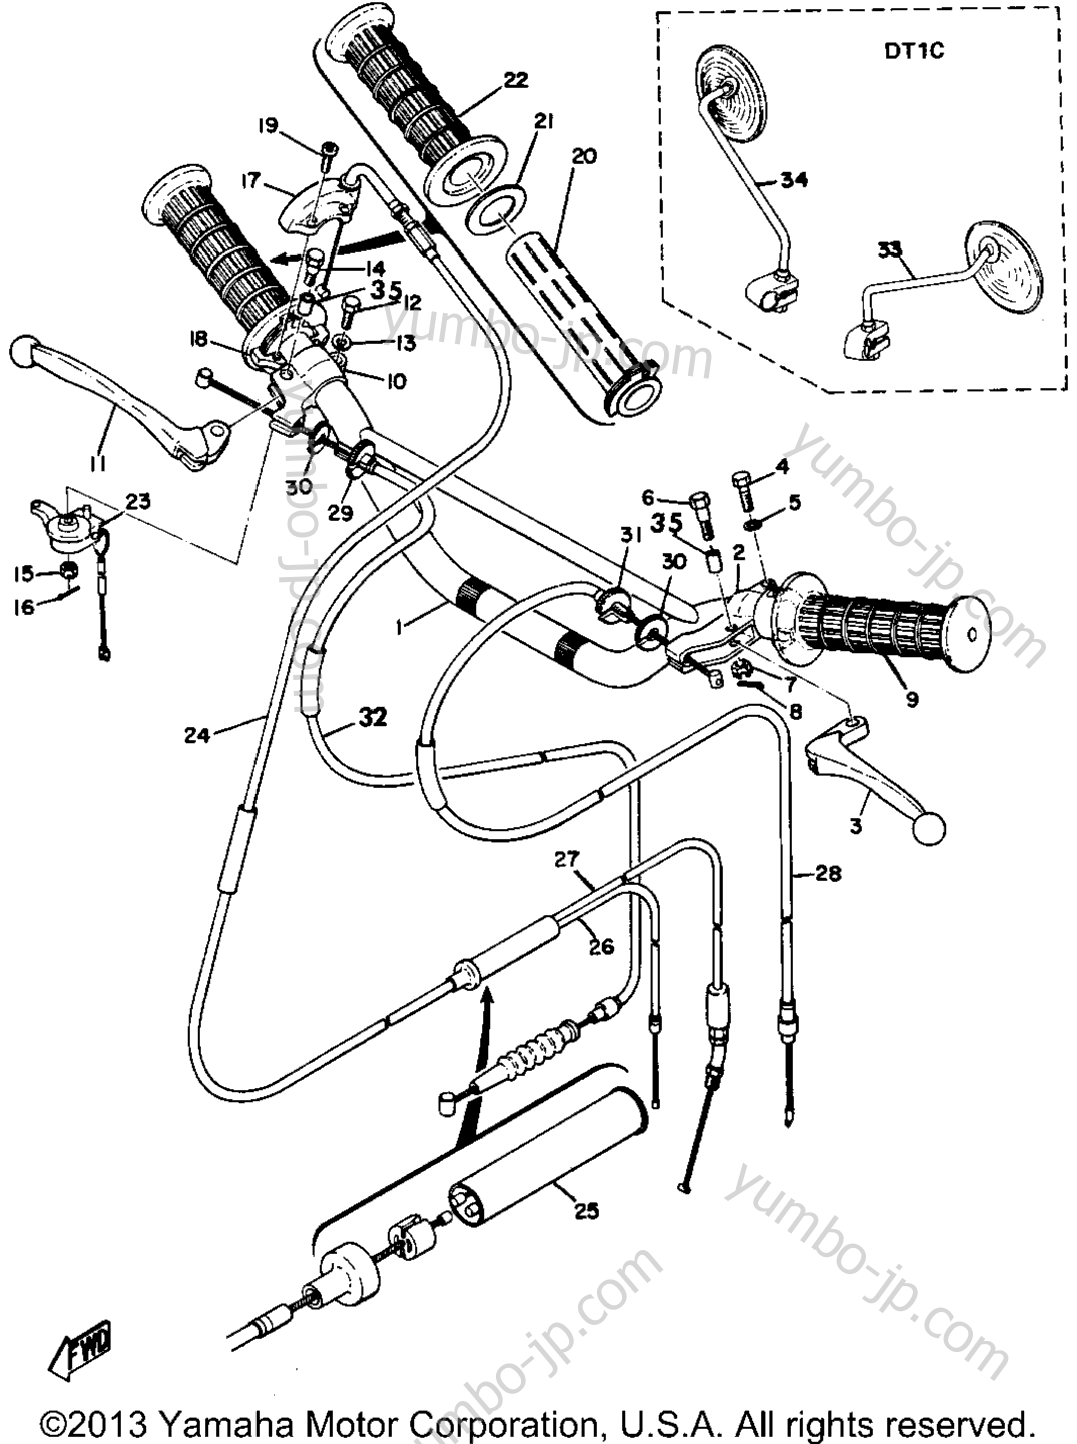 Handle & Wire для мотоциклов YAMAHA DT1C 1970 г.